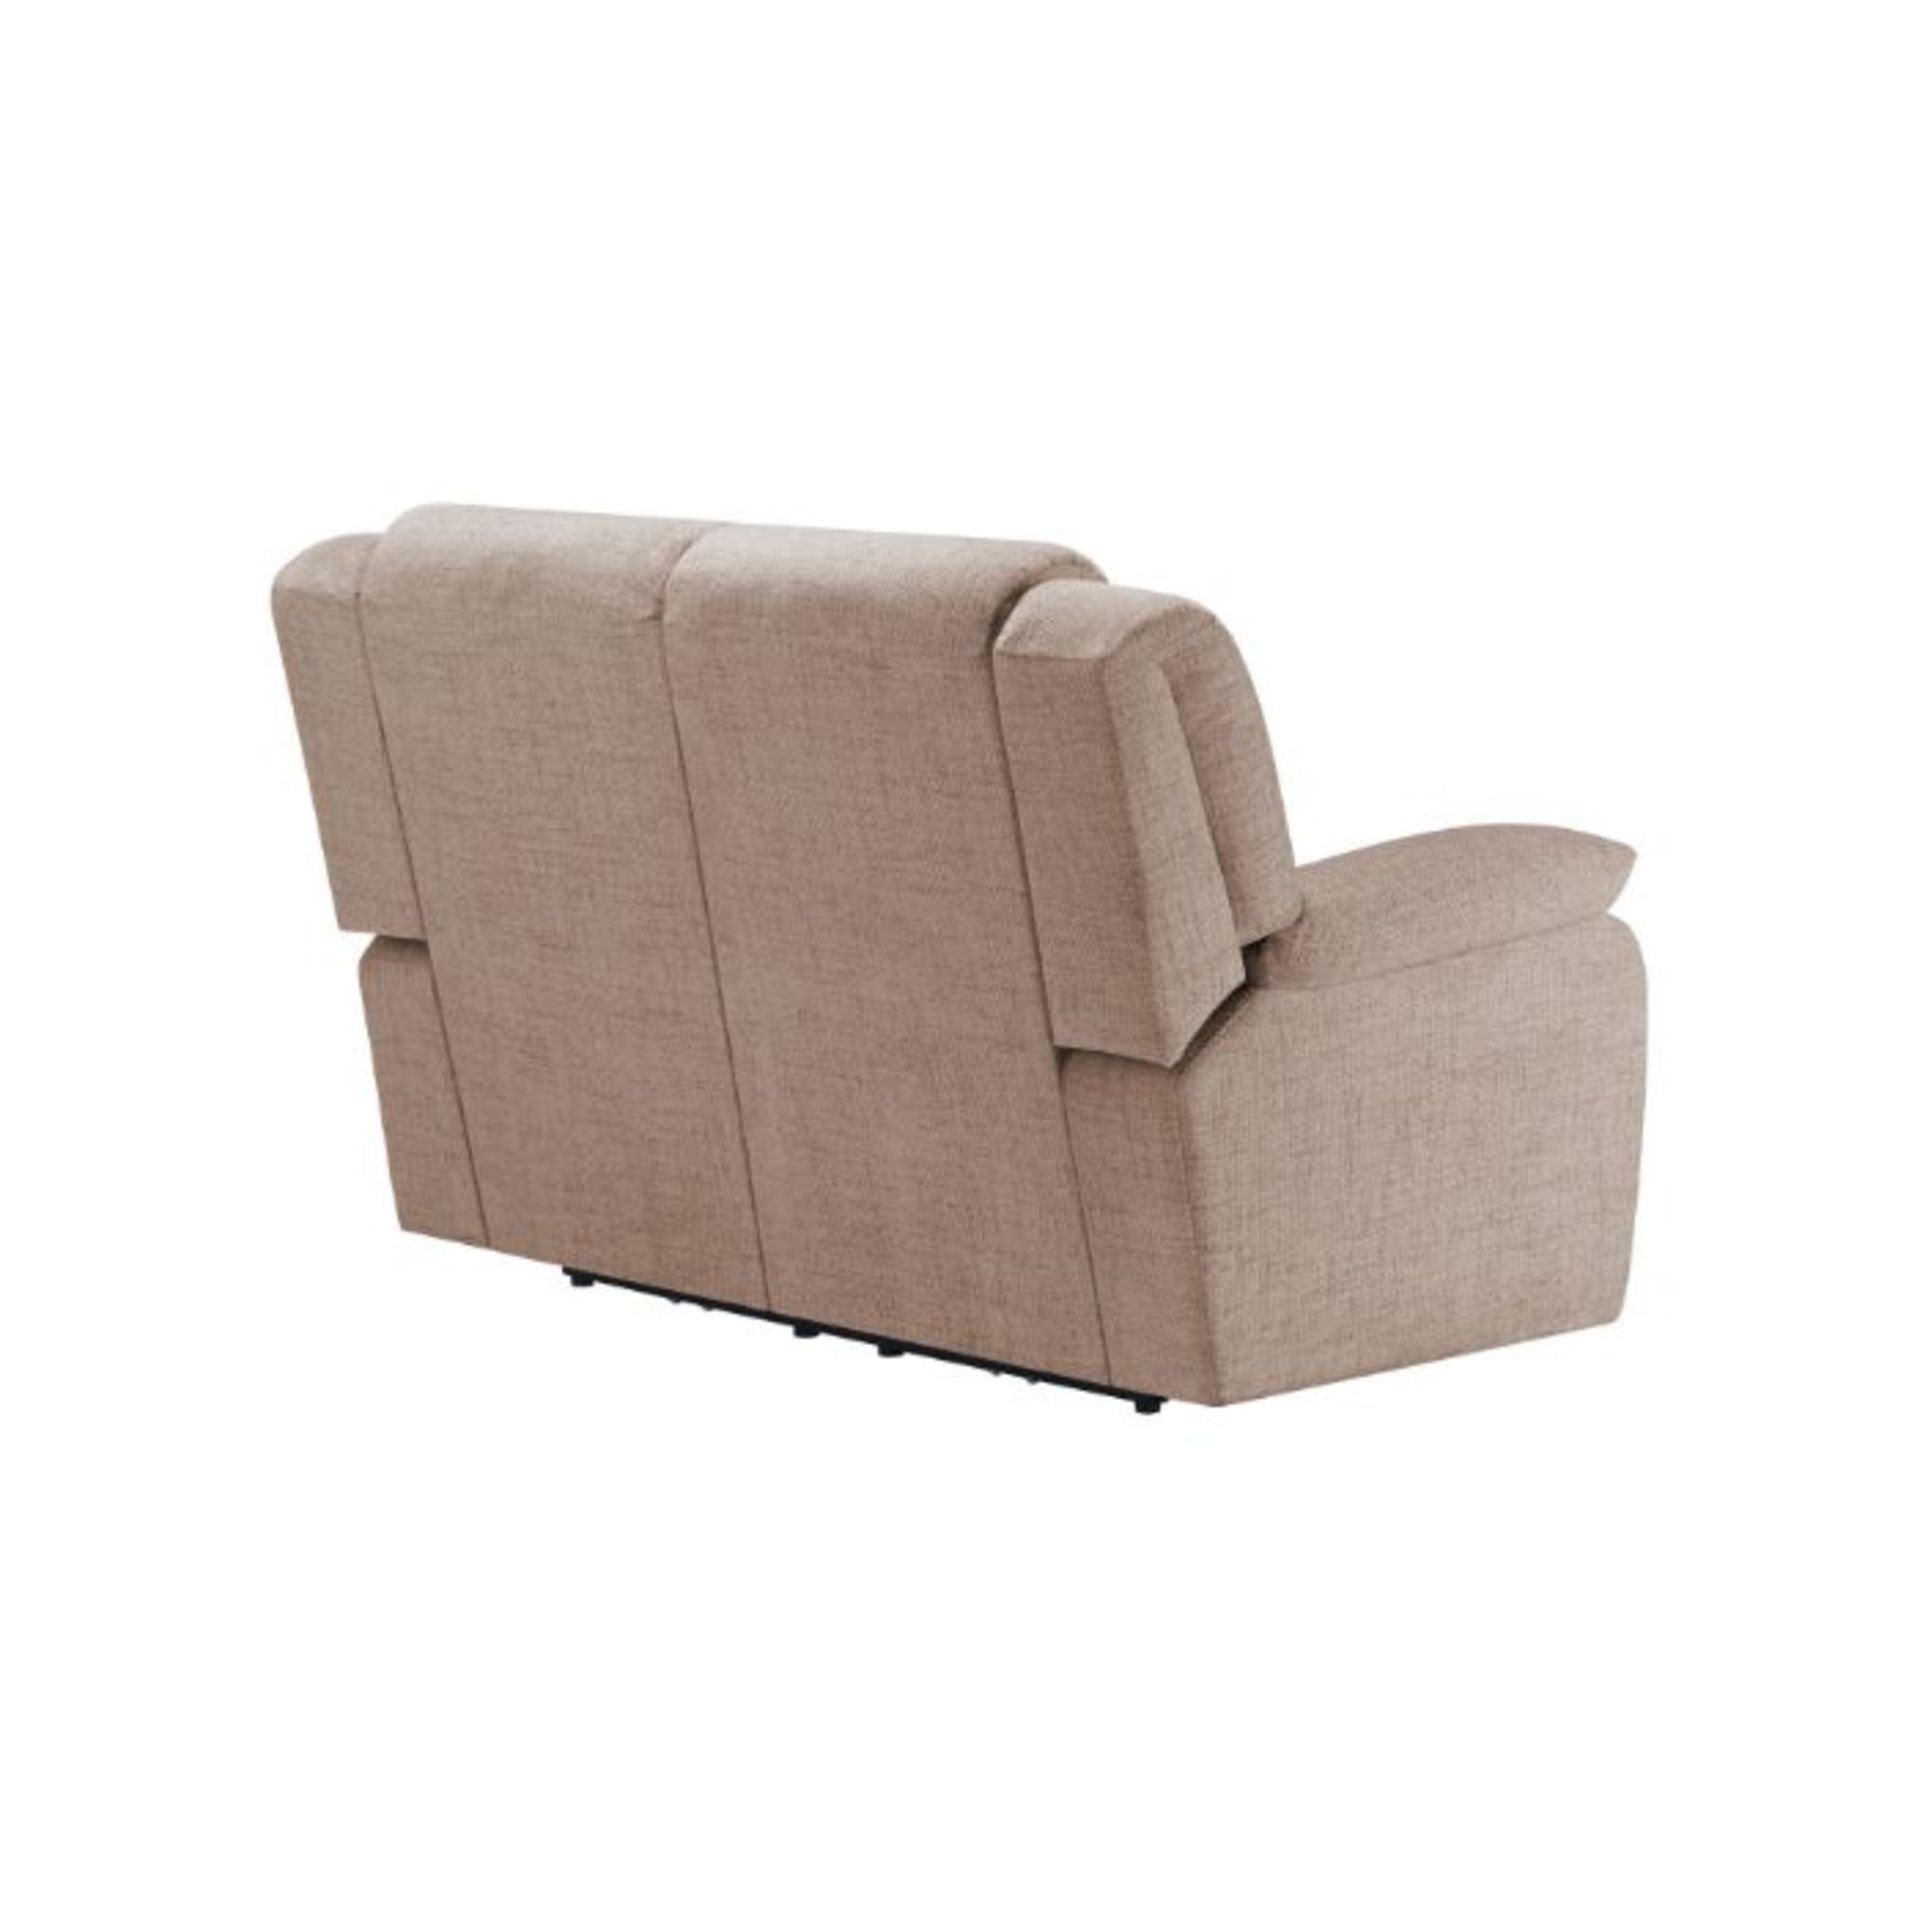 Oak Furnitureland Marlow 3 Seater Sofa In Dorset Beige Fabric RRP ?949.99 Our Marlow range is - Image 3 of 5